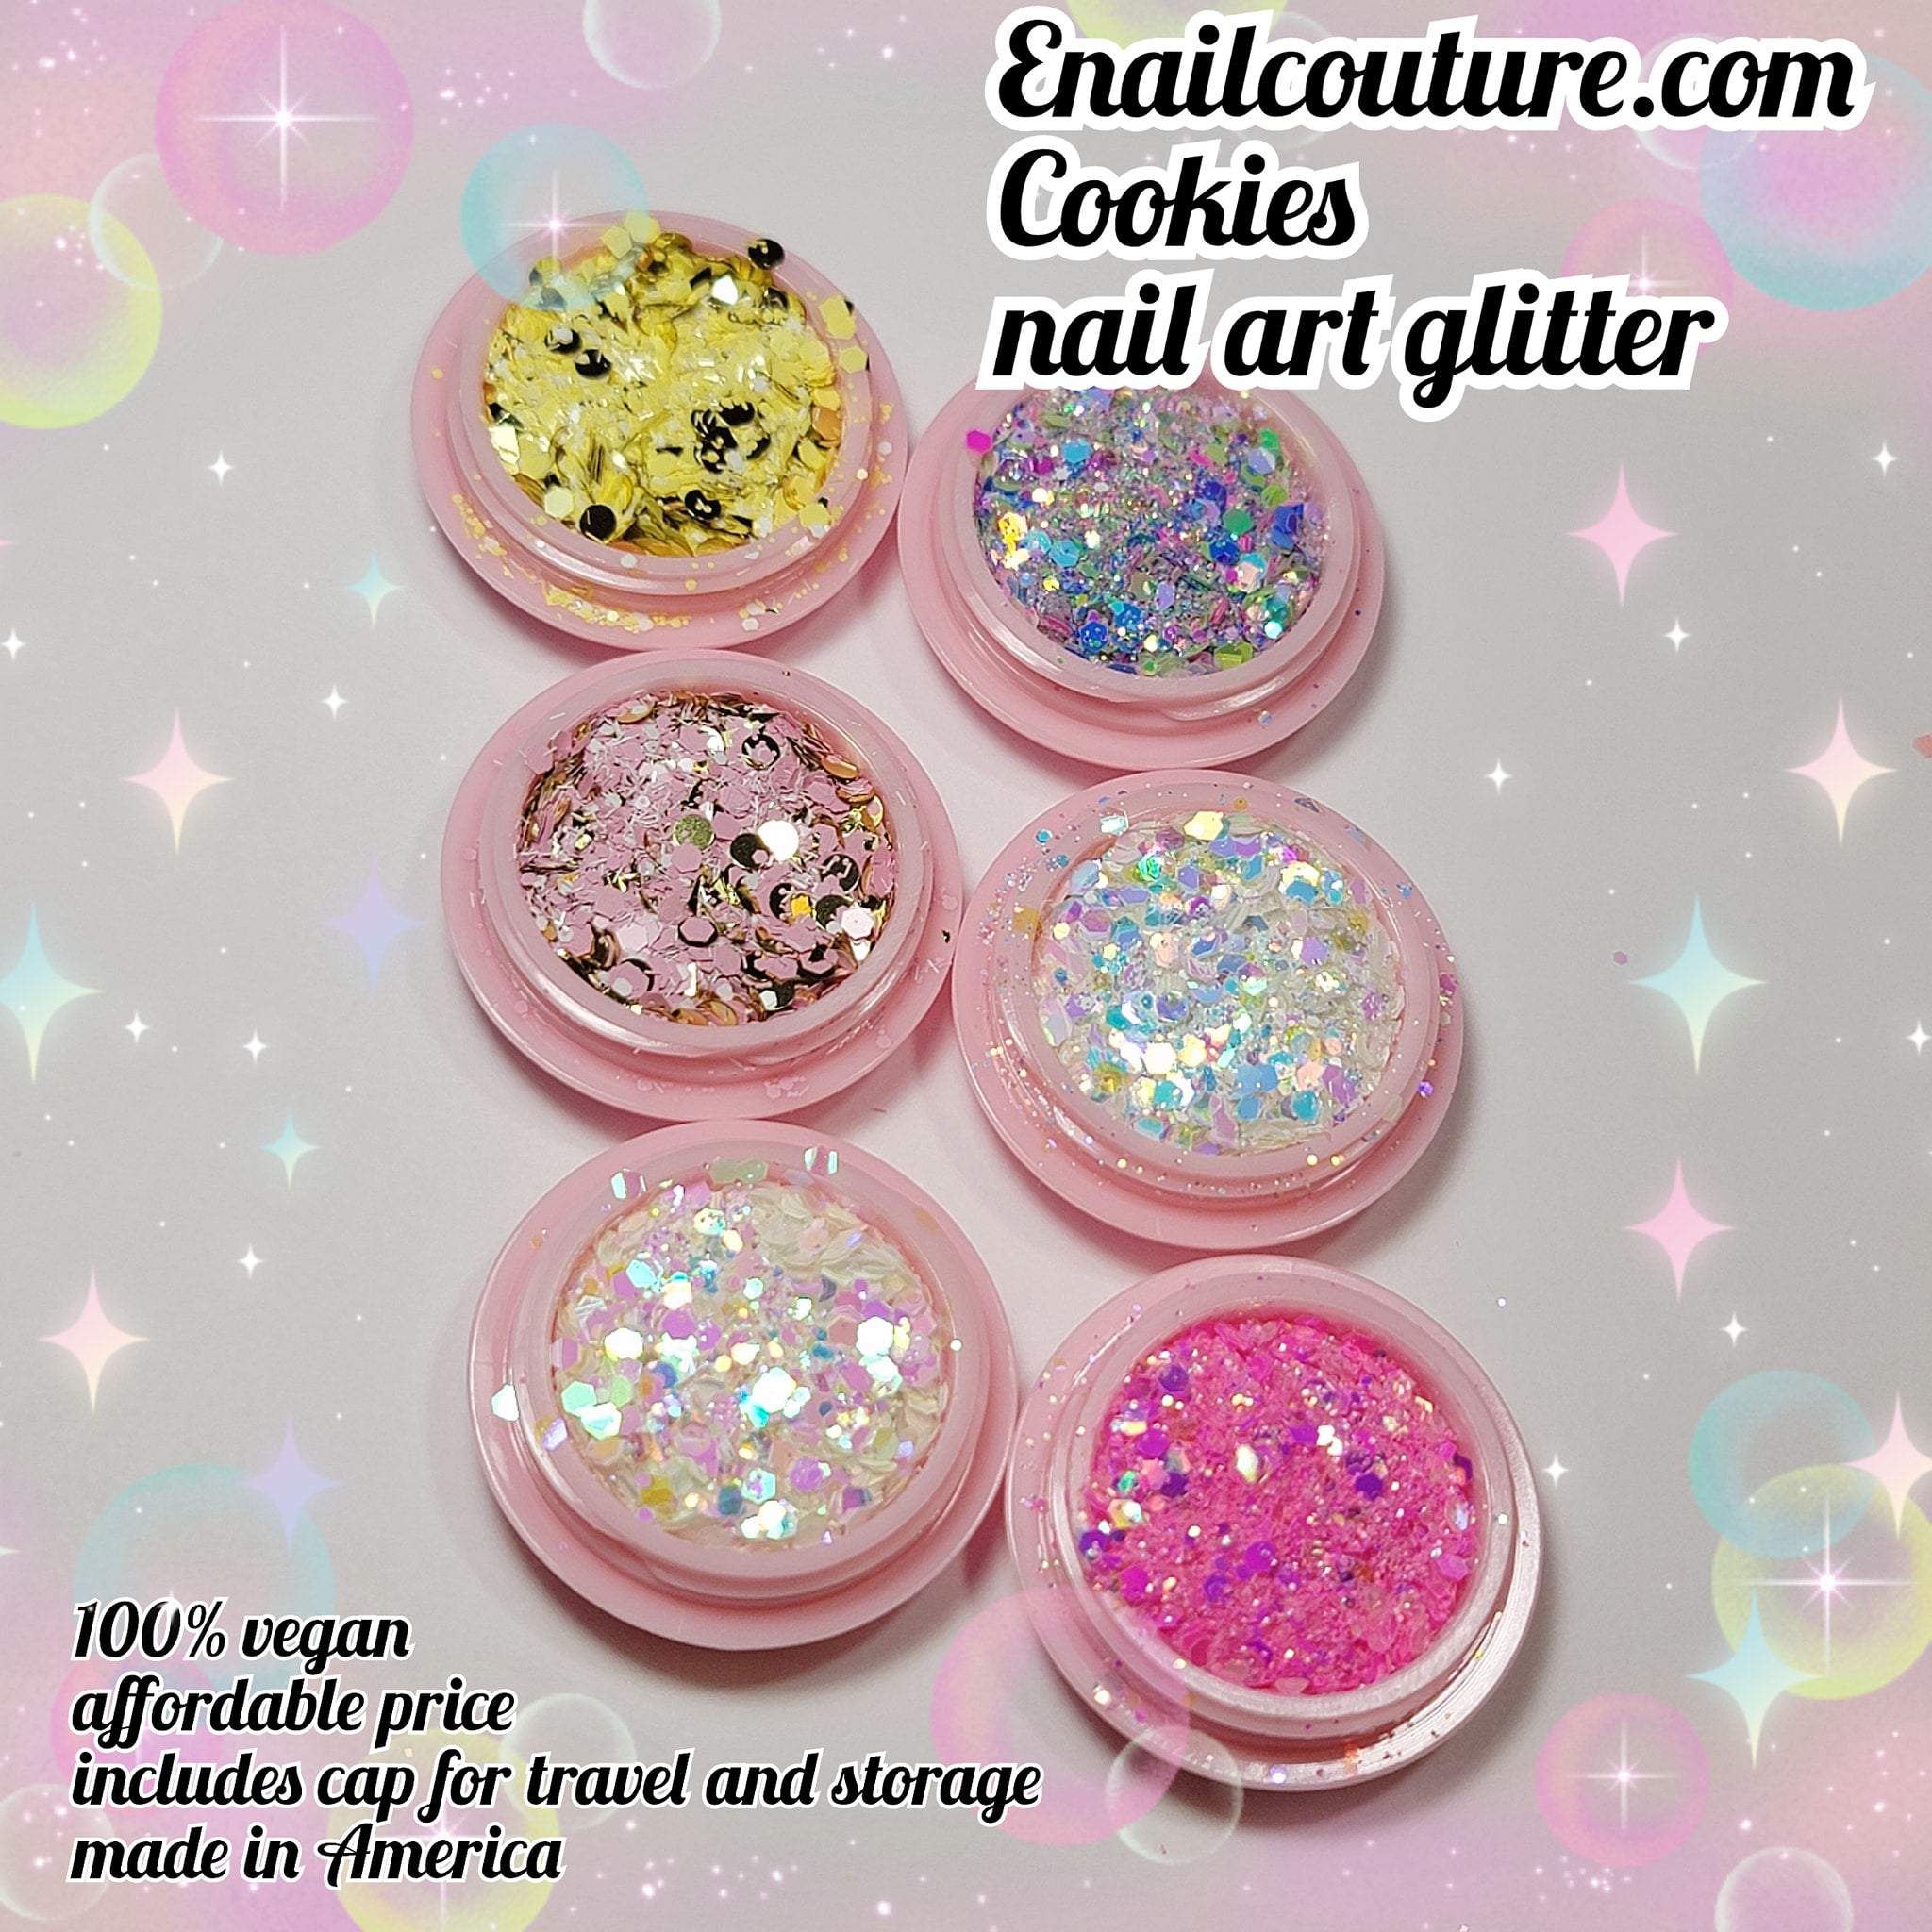 Cookies glitter set (Set of 6 Holographic Nail Glitter Mermaid